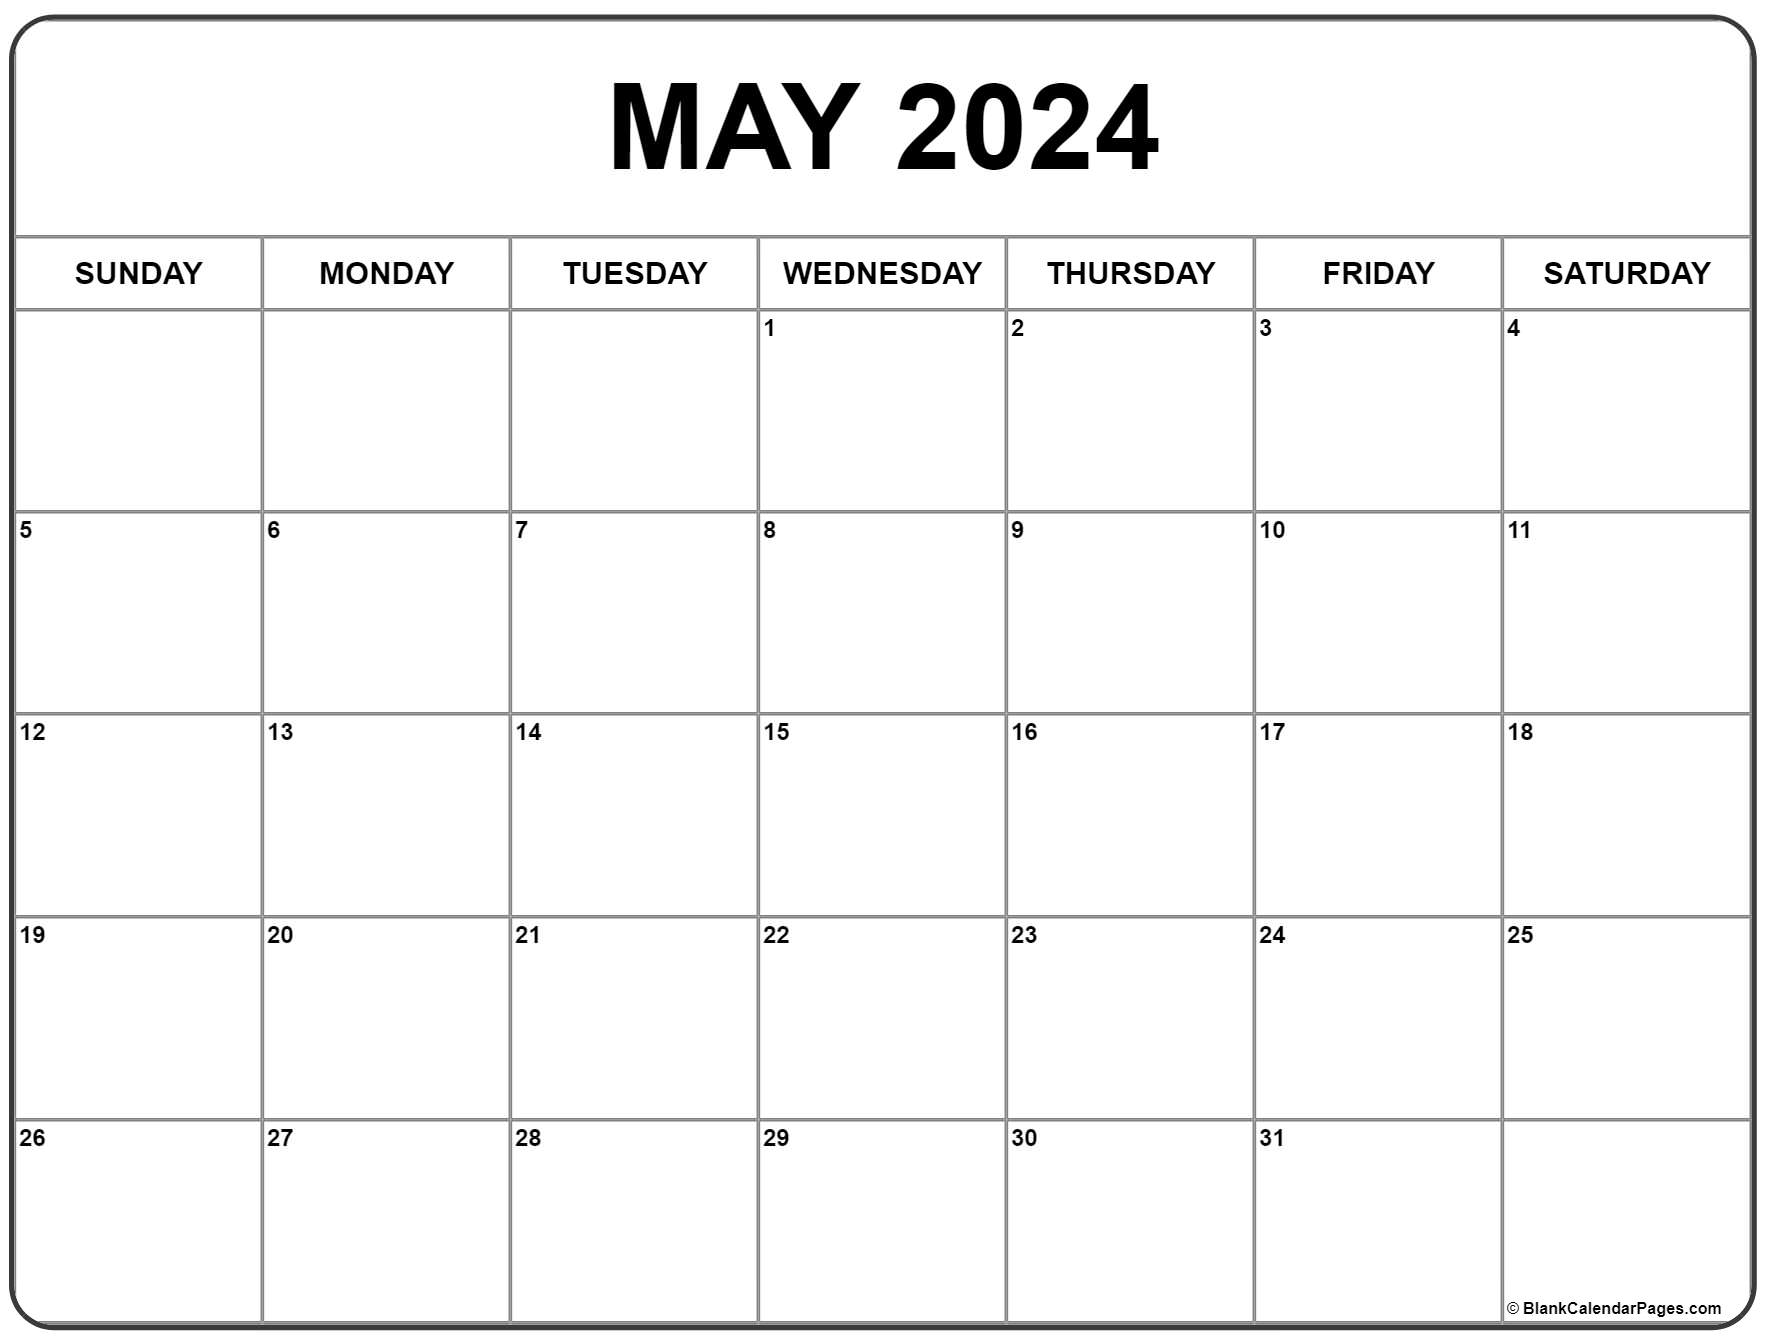 May 2024 Calendar | Free Printable Calendar for Printable Weekly Calendar May 2024